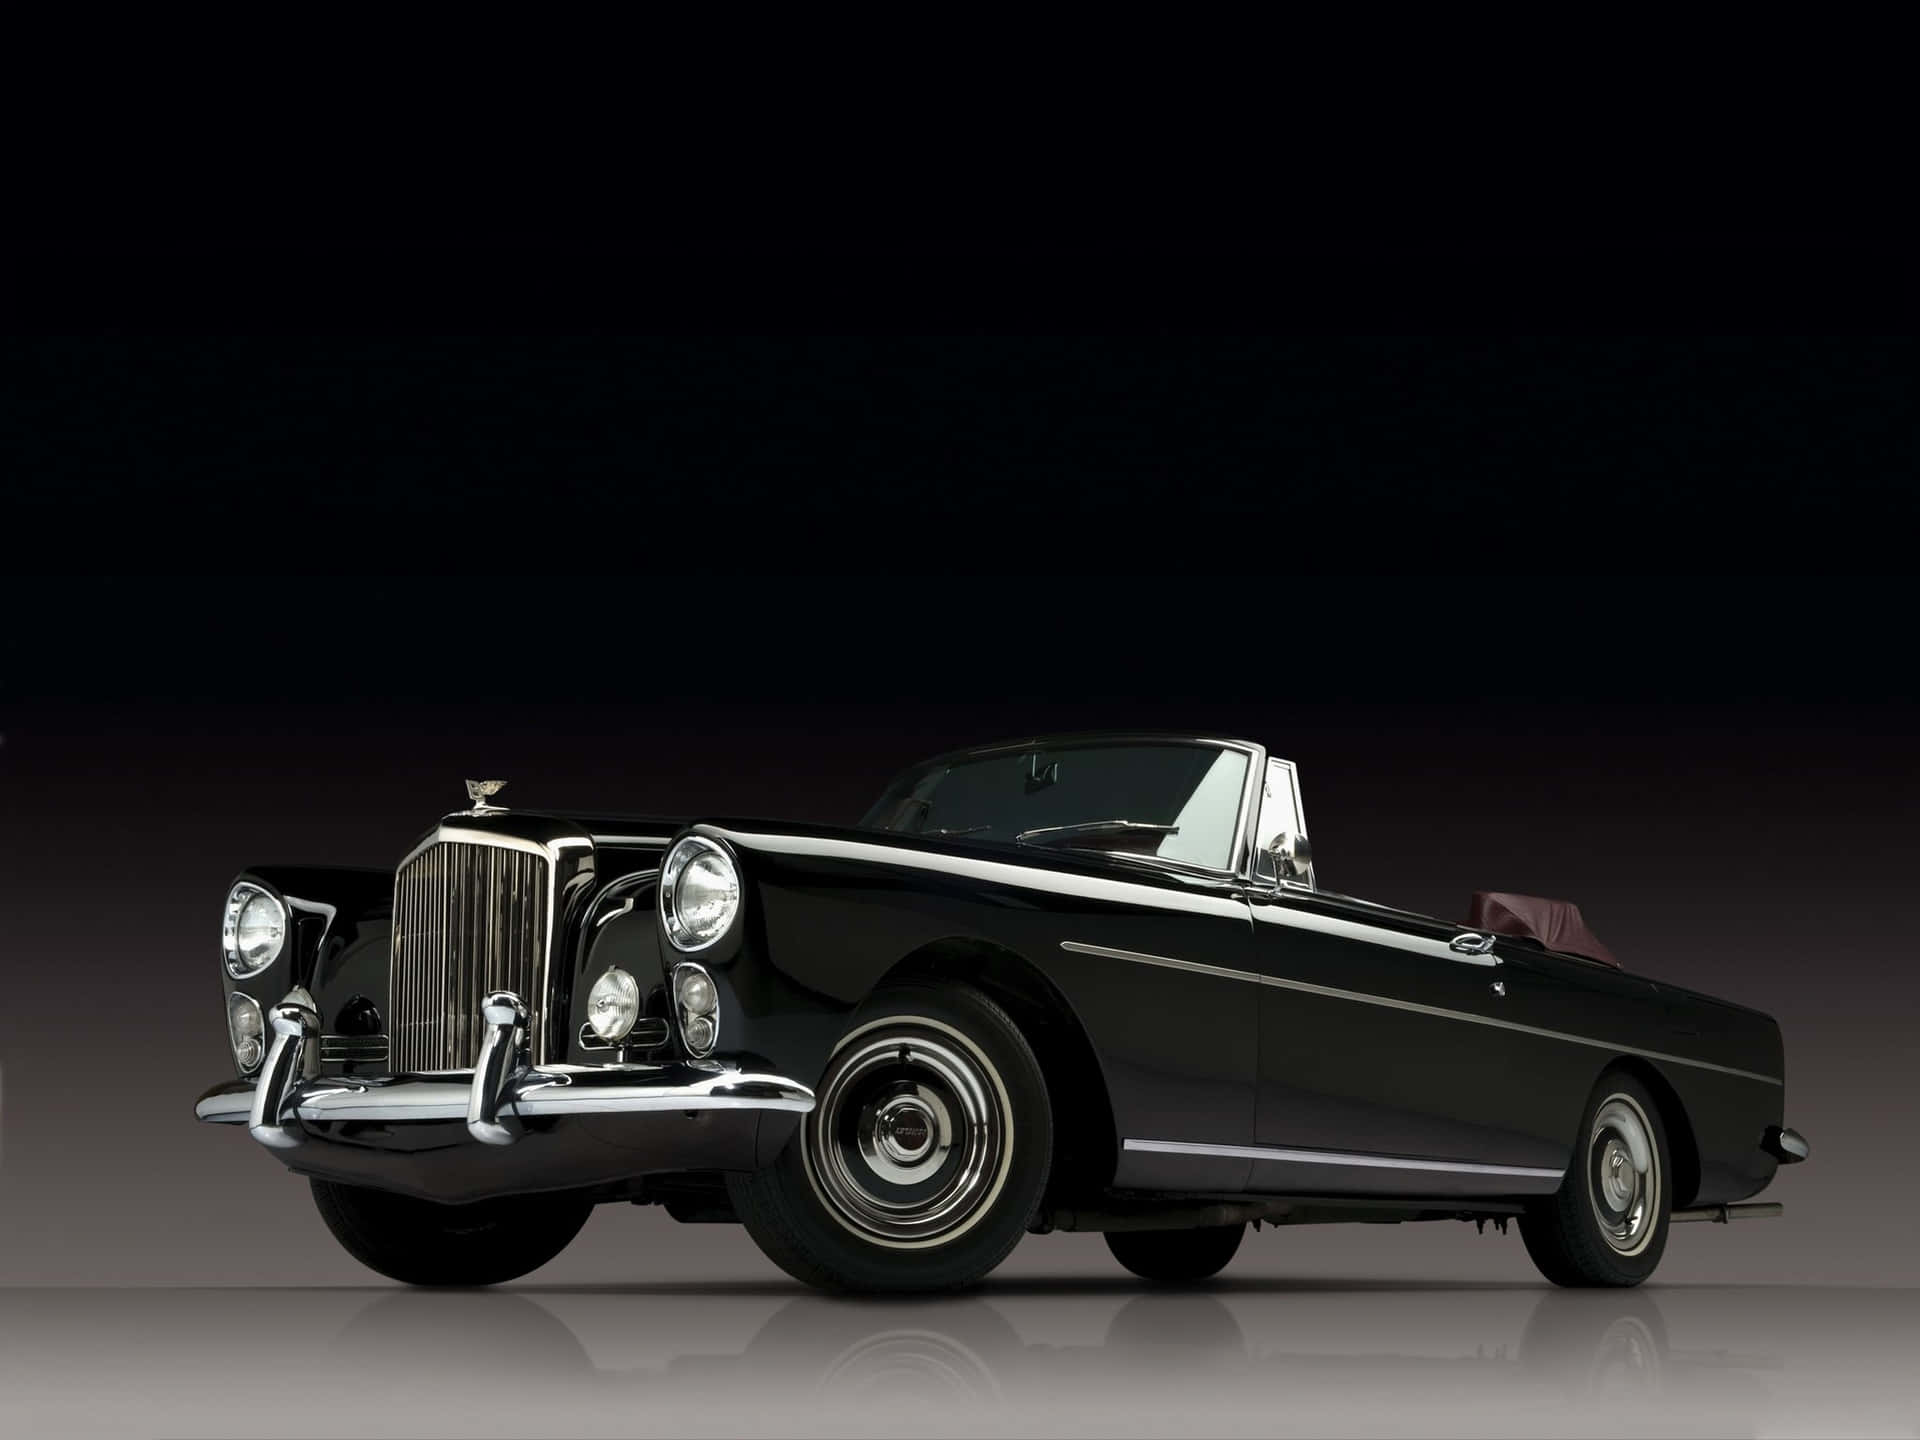 Vintage Bentley Awaits – Stunning Classic Car Wallpaper